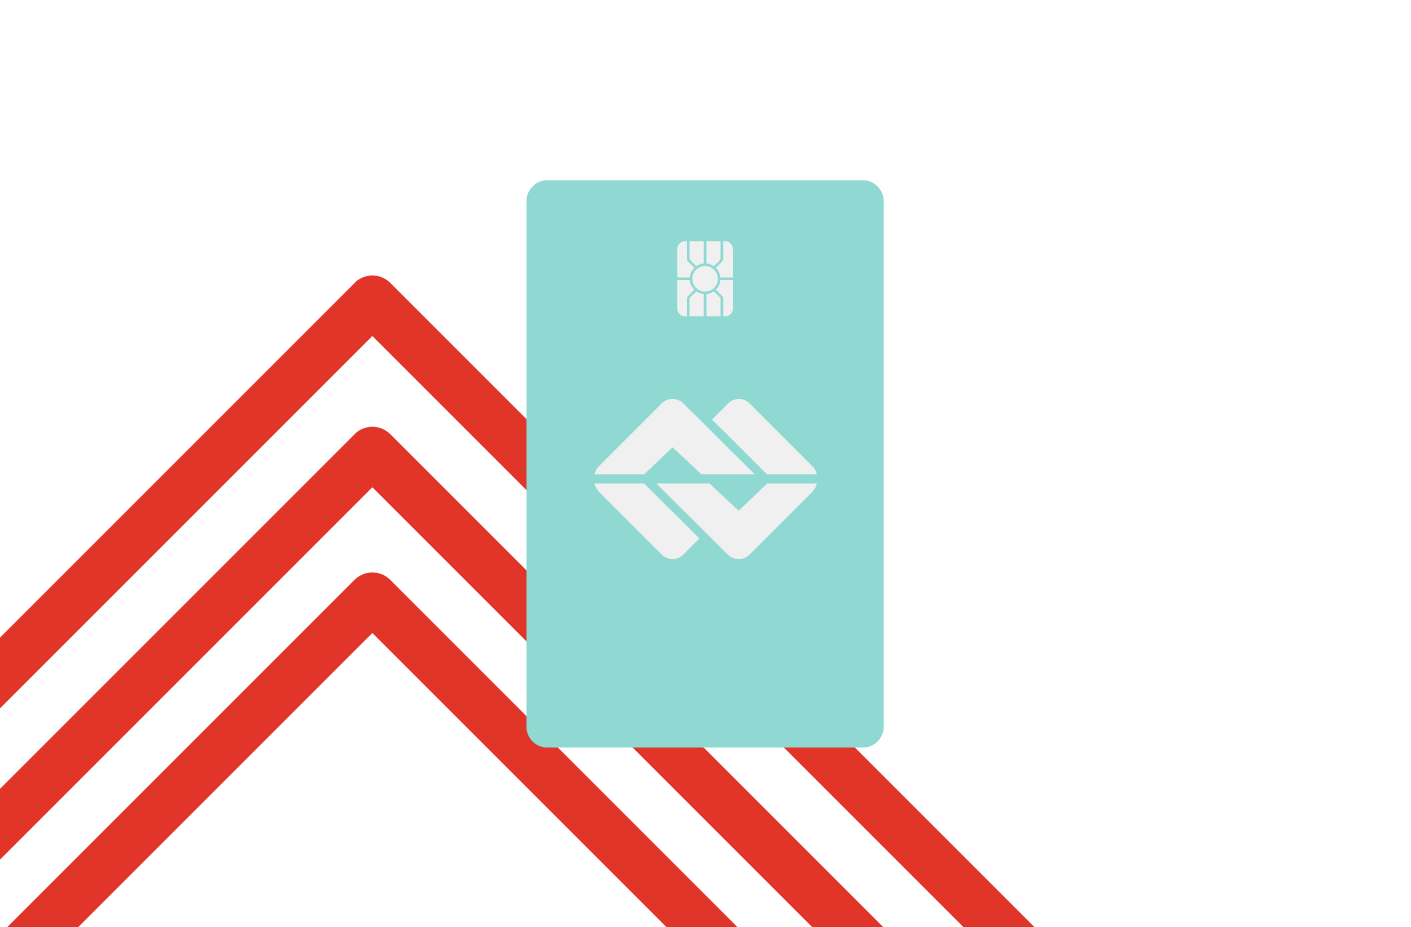 Blue Visa card illustration with transparent background and red stripes